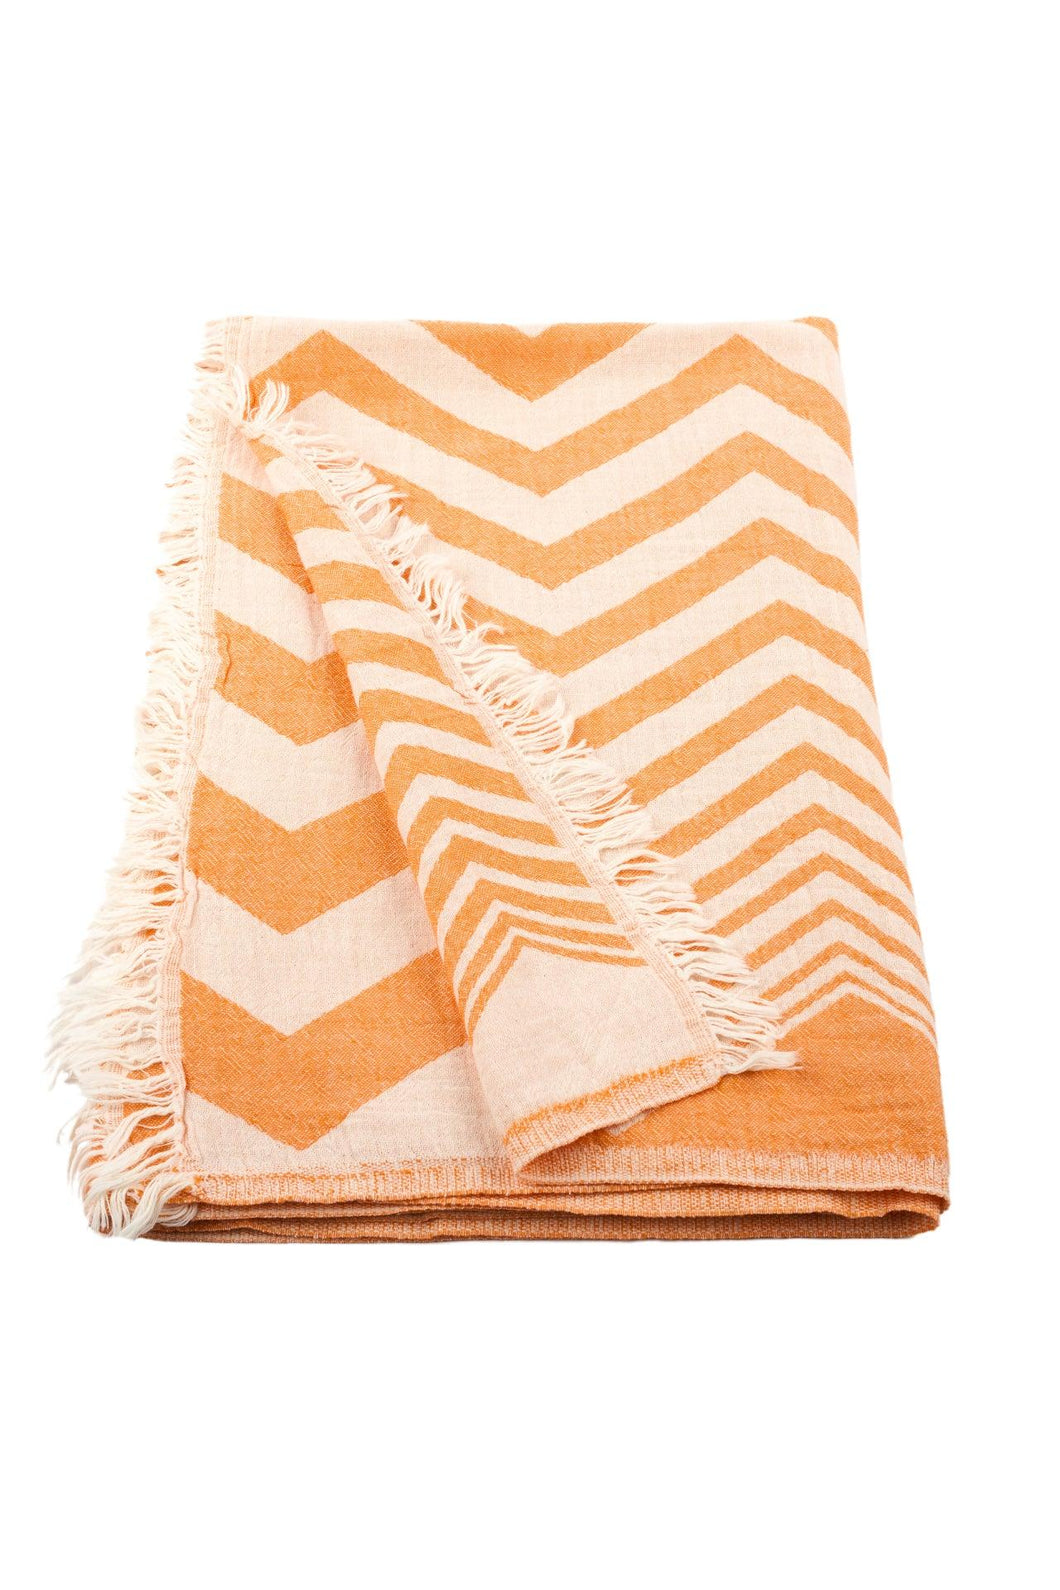 100% Cotton Luxury Hammam Towel